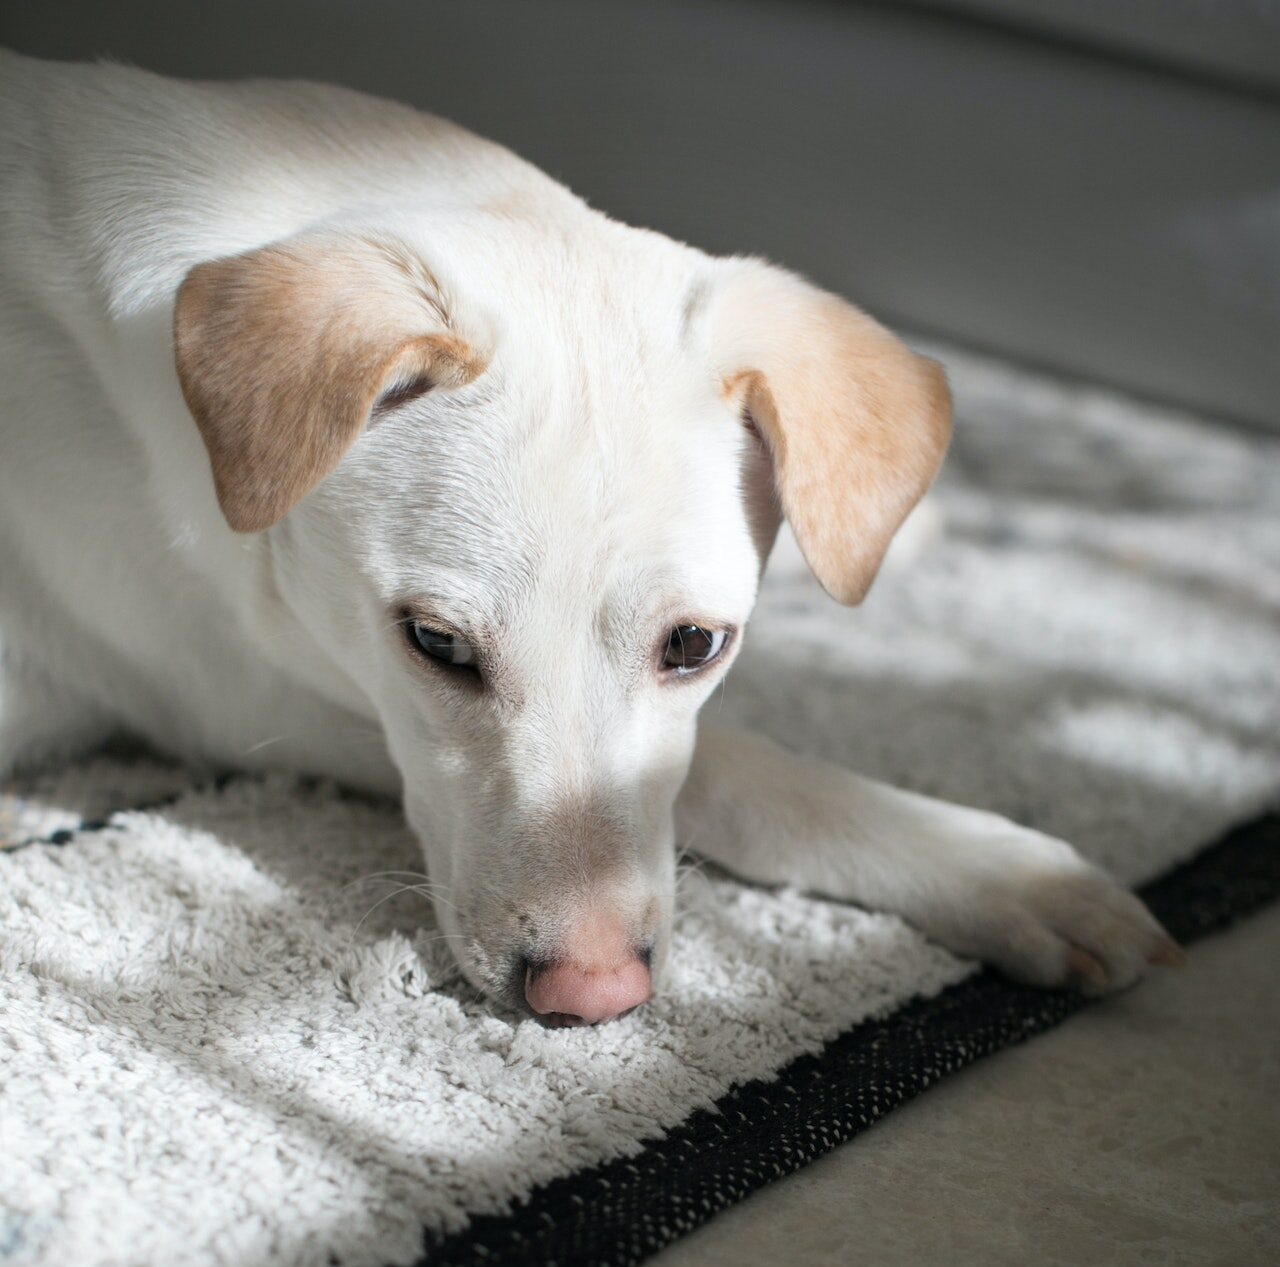 Cute Labrador Dog Lying on the Carpet